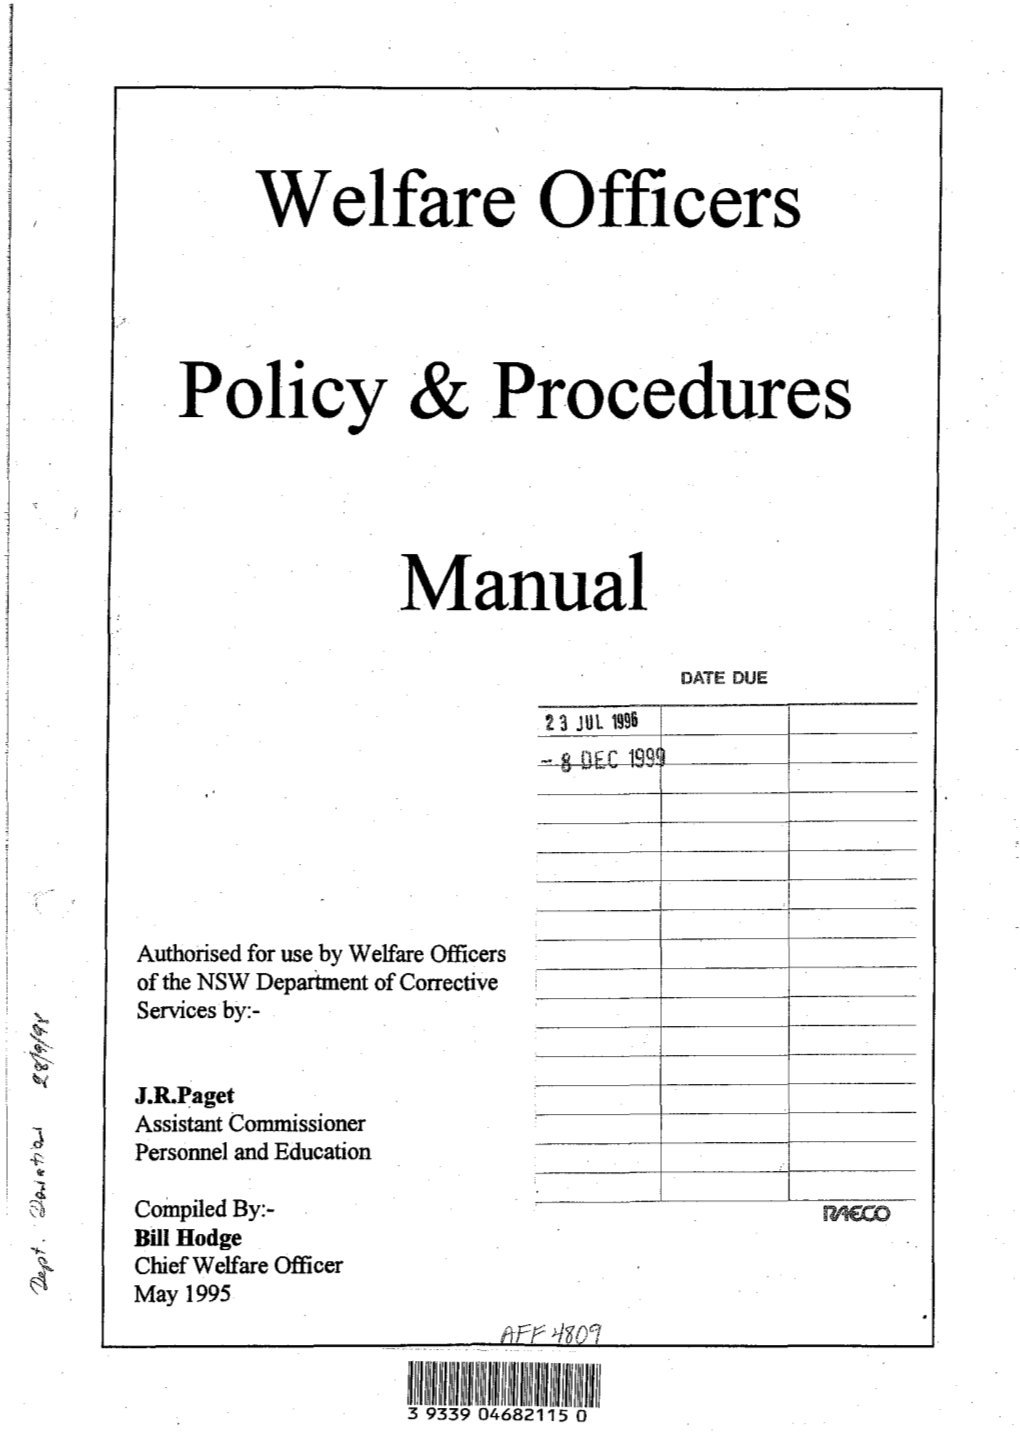 Welfare Officers Manual